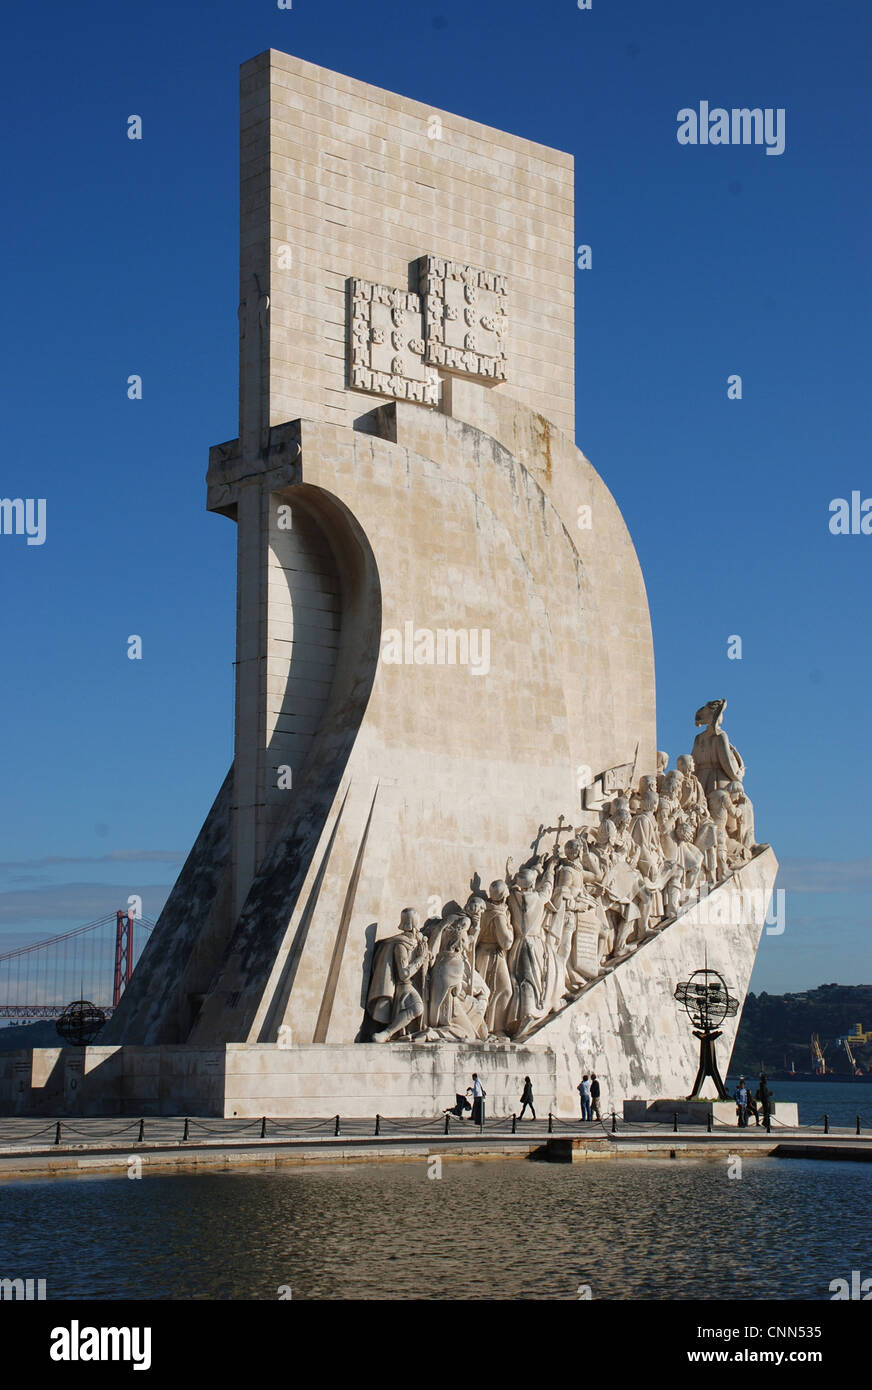 Denkmal am Ufer der Stadt Denkmal Entdeckungen Padrão Dos Descobrimentos Tagus Fluss Belem von Lissabon Portugal november Stockfoto